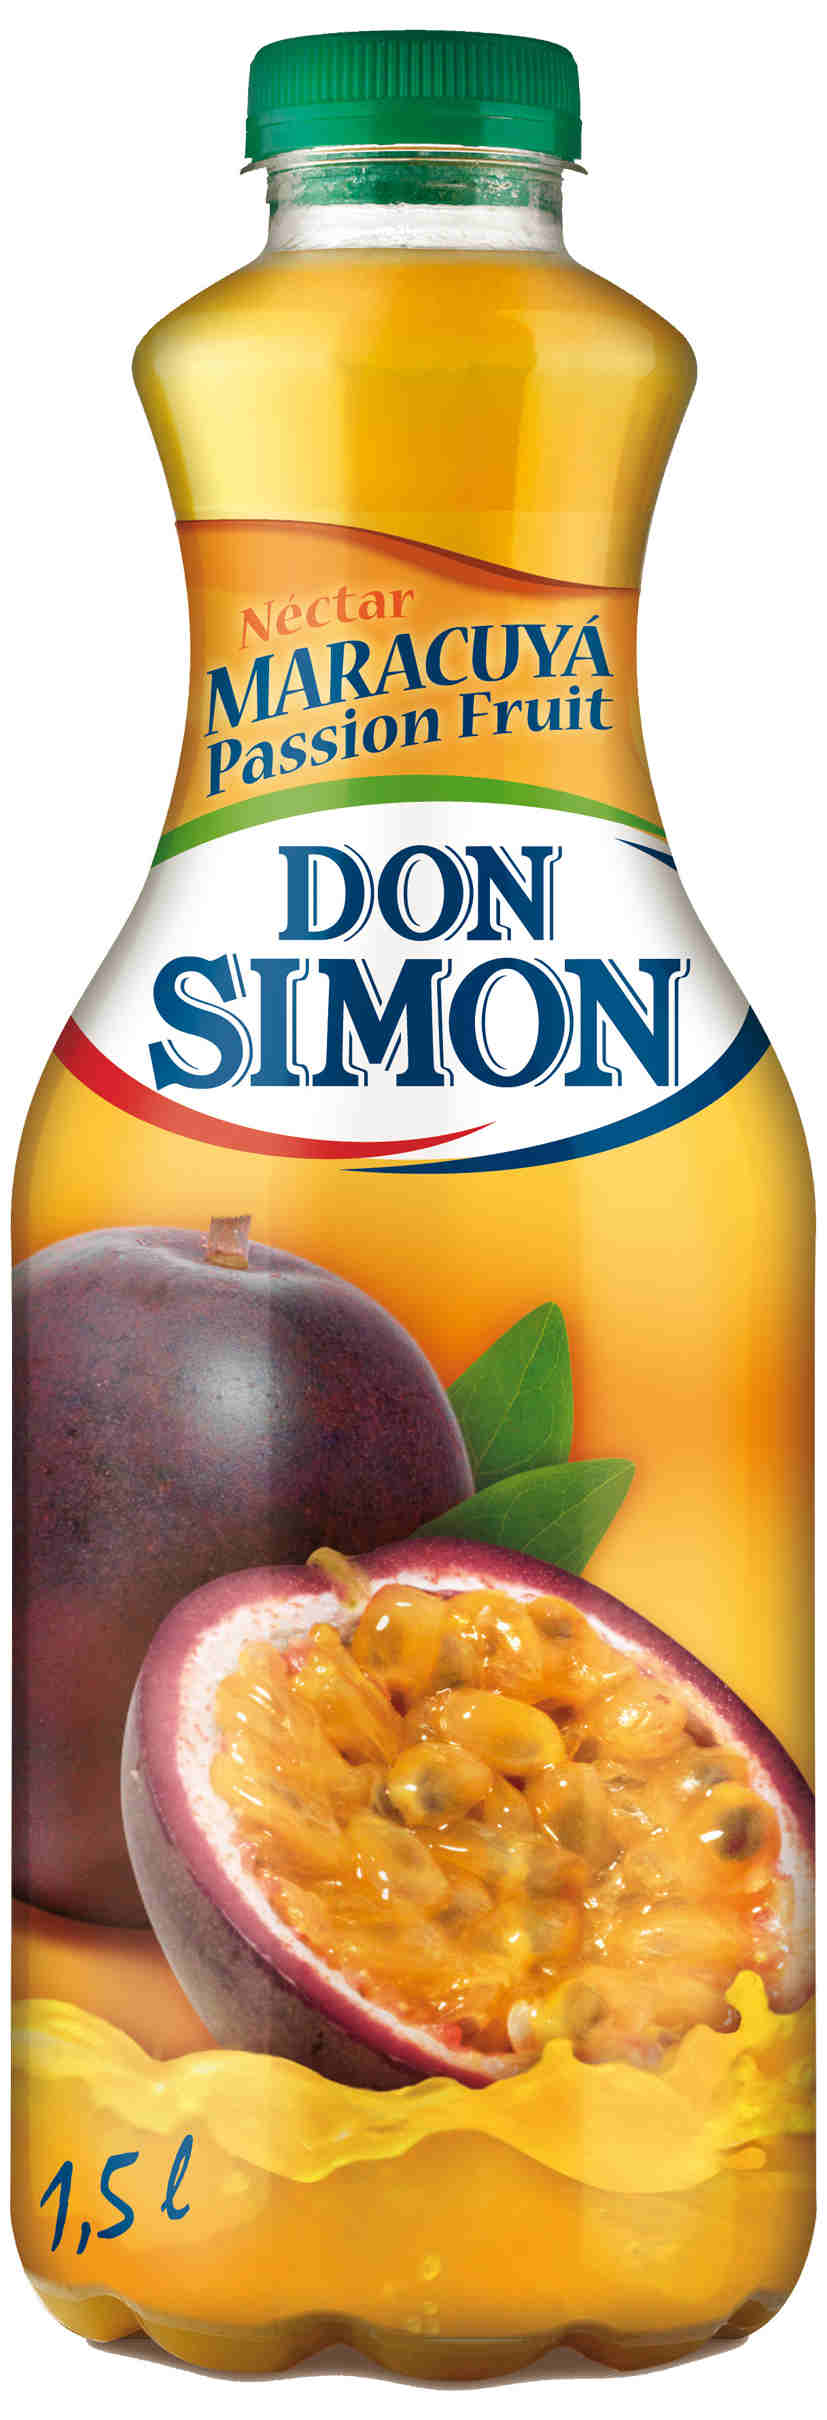 Nectar de maracuya Don Simon